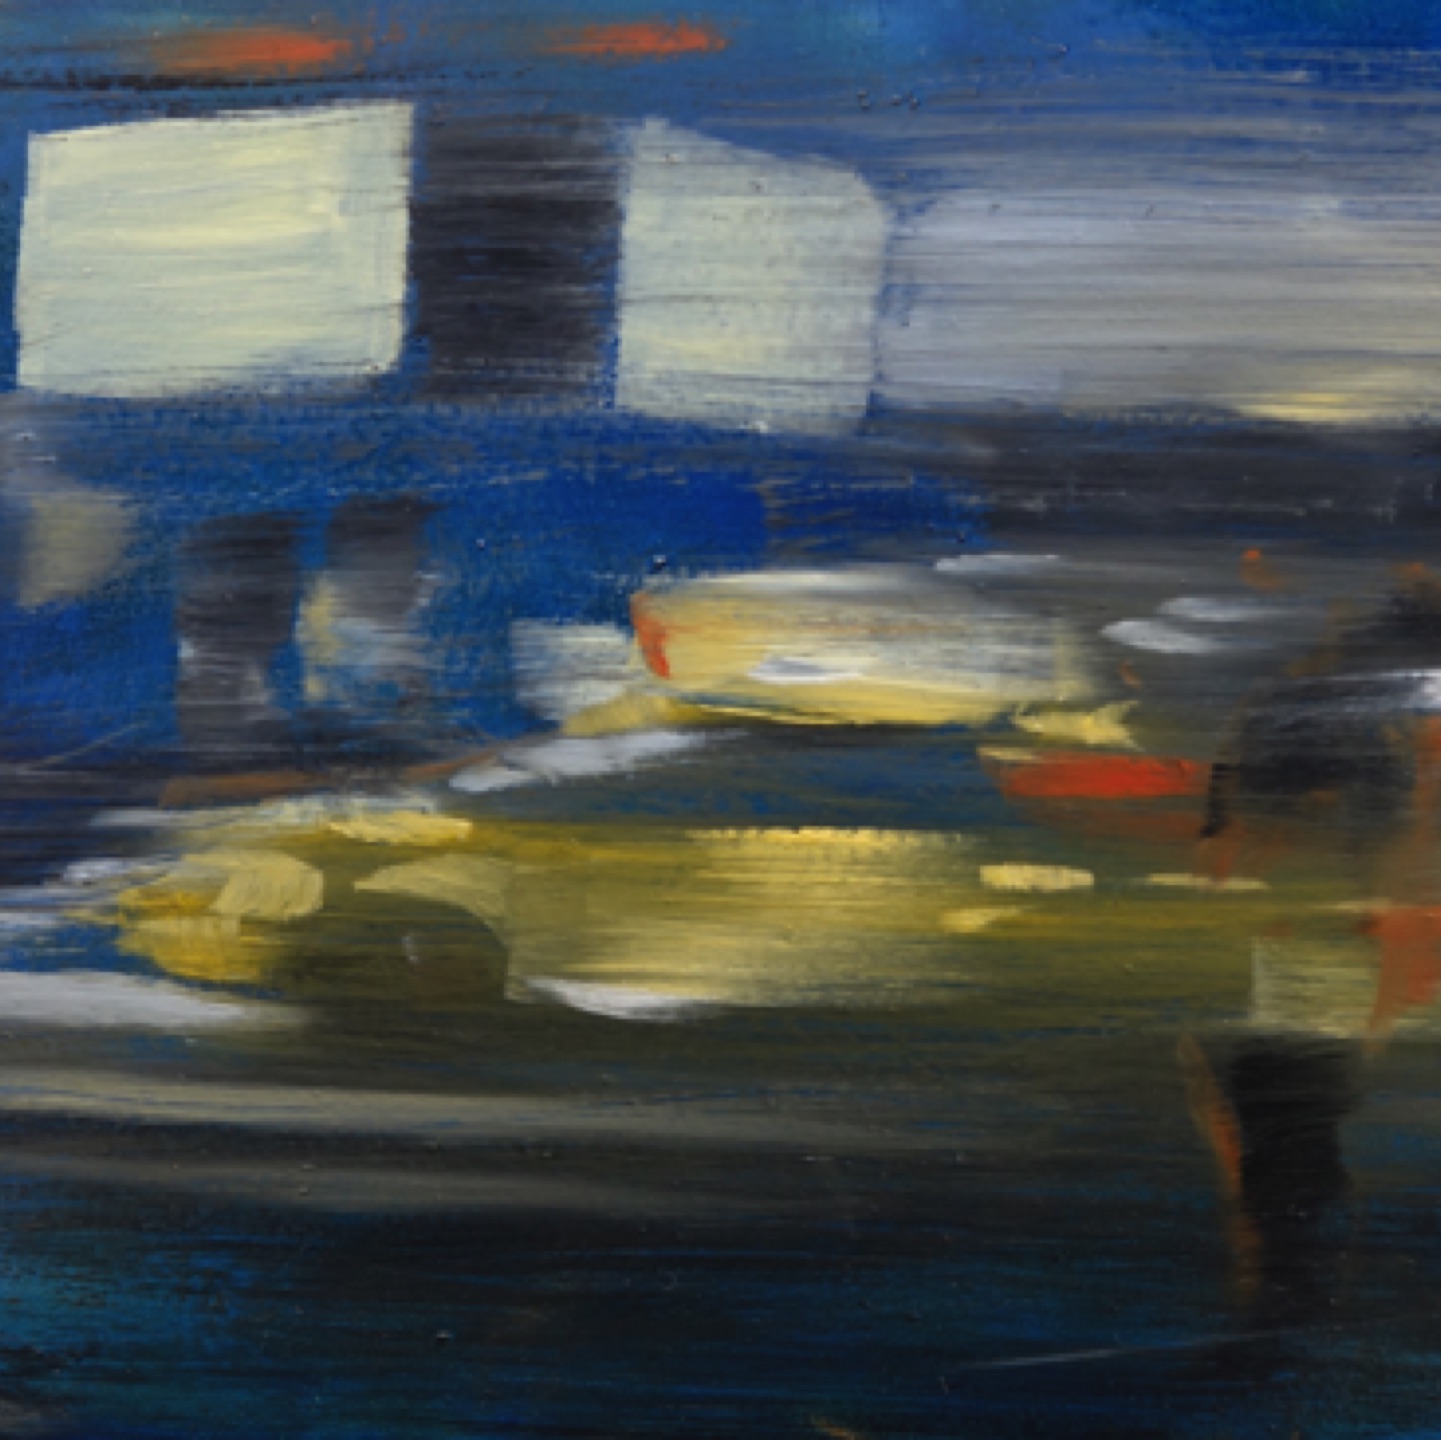 Gregg Chadwick
The Language of Rain
6”x8” oil on panel 2014 
Henthorn-Iwane Collection, Berkeley, California